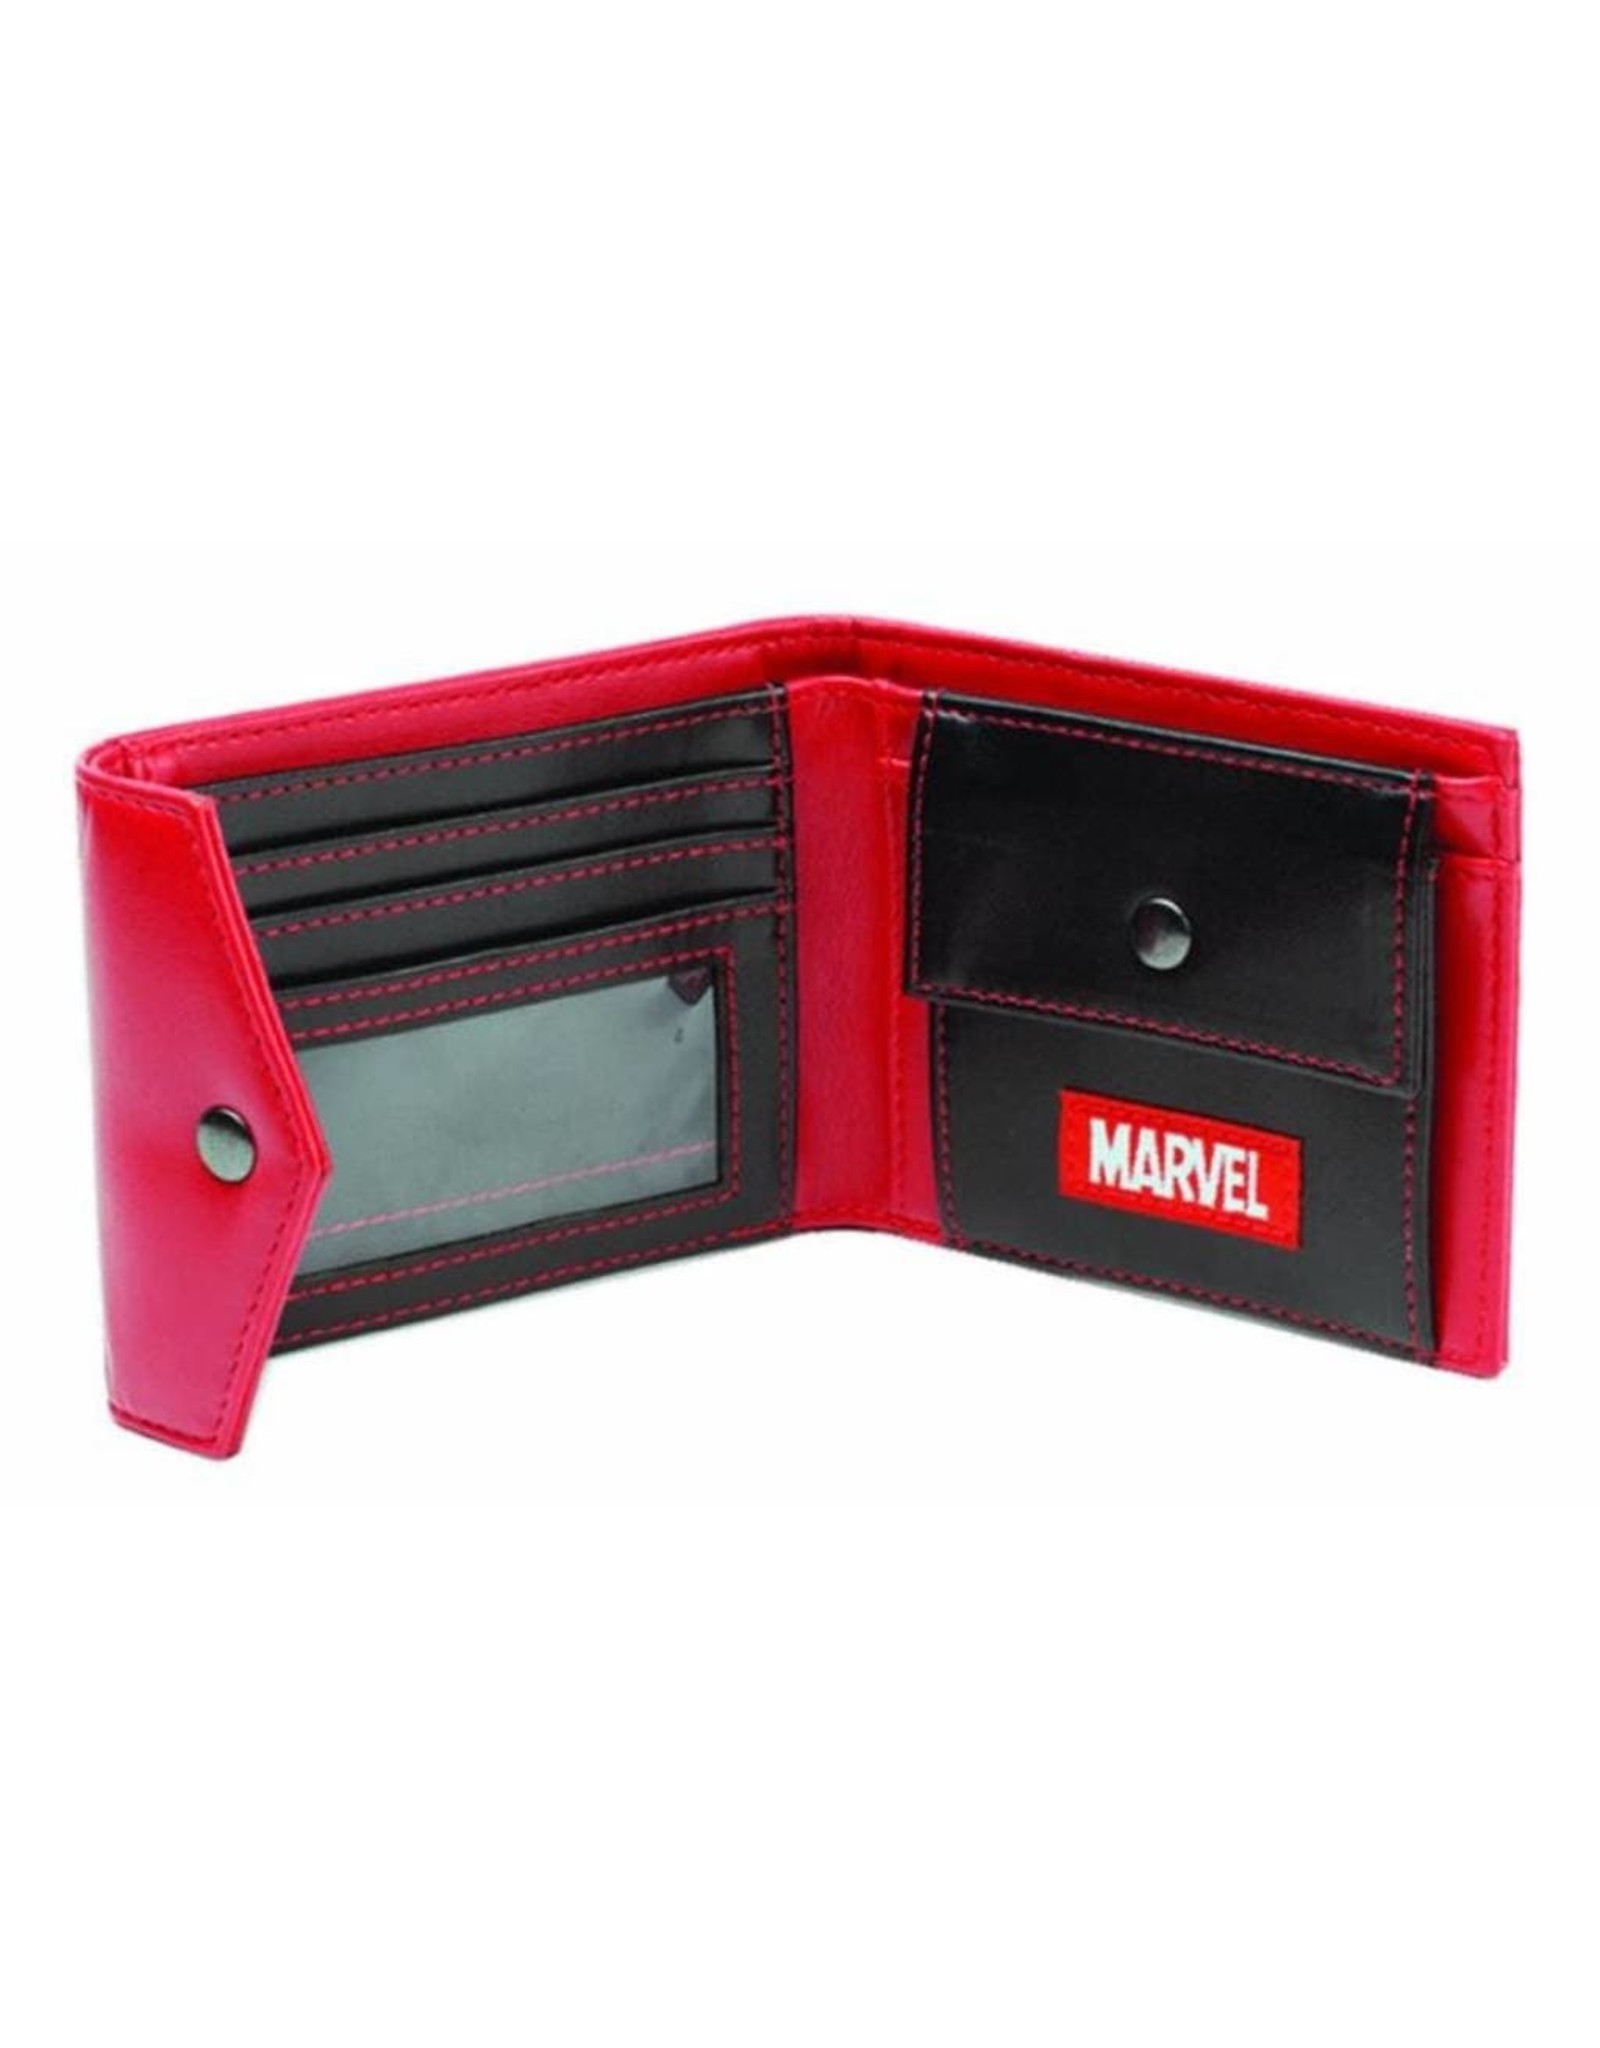 Marvel Marvel bags - Deadpool Wallet Marvel